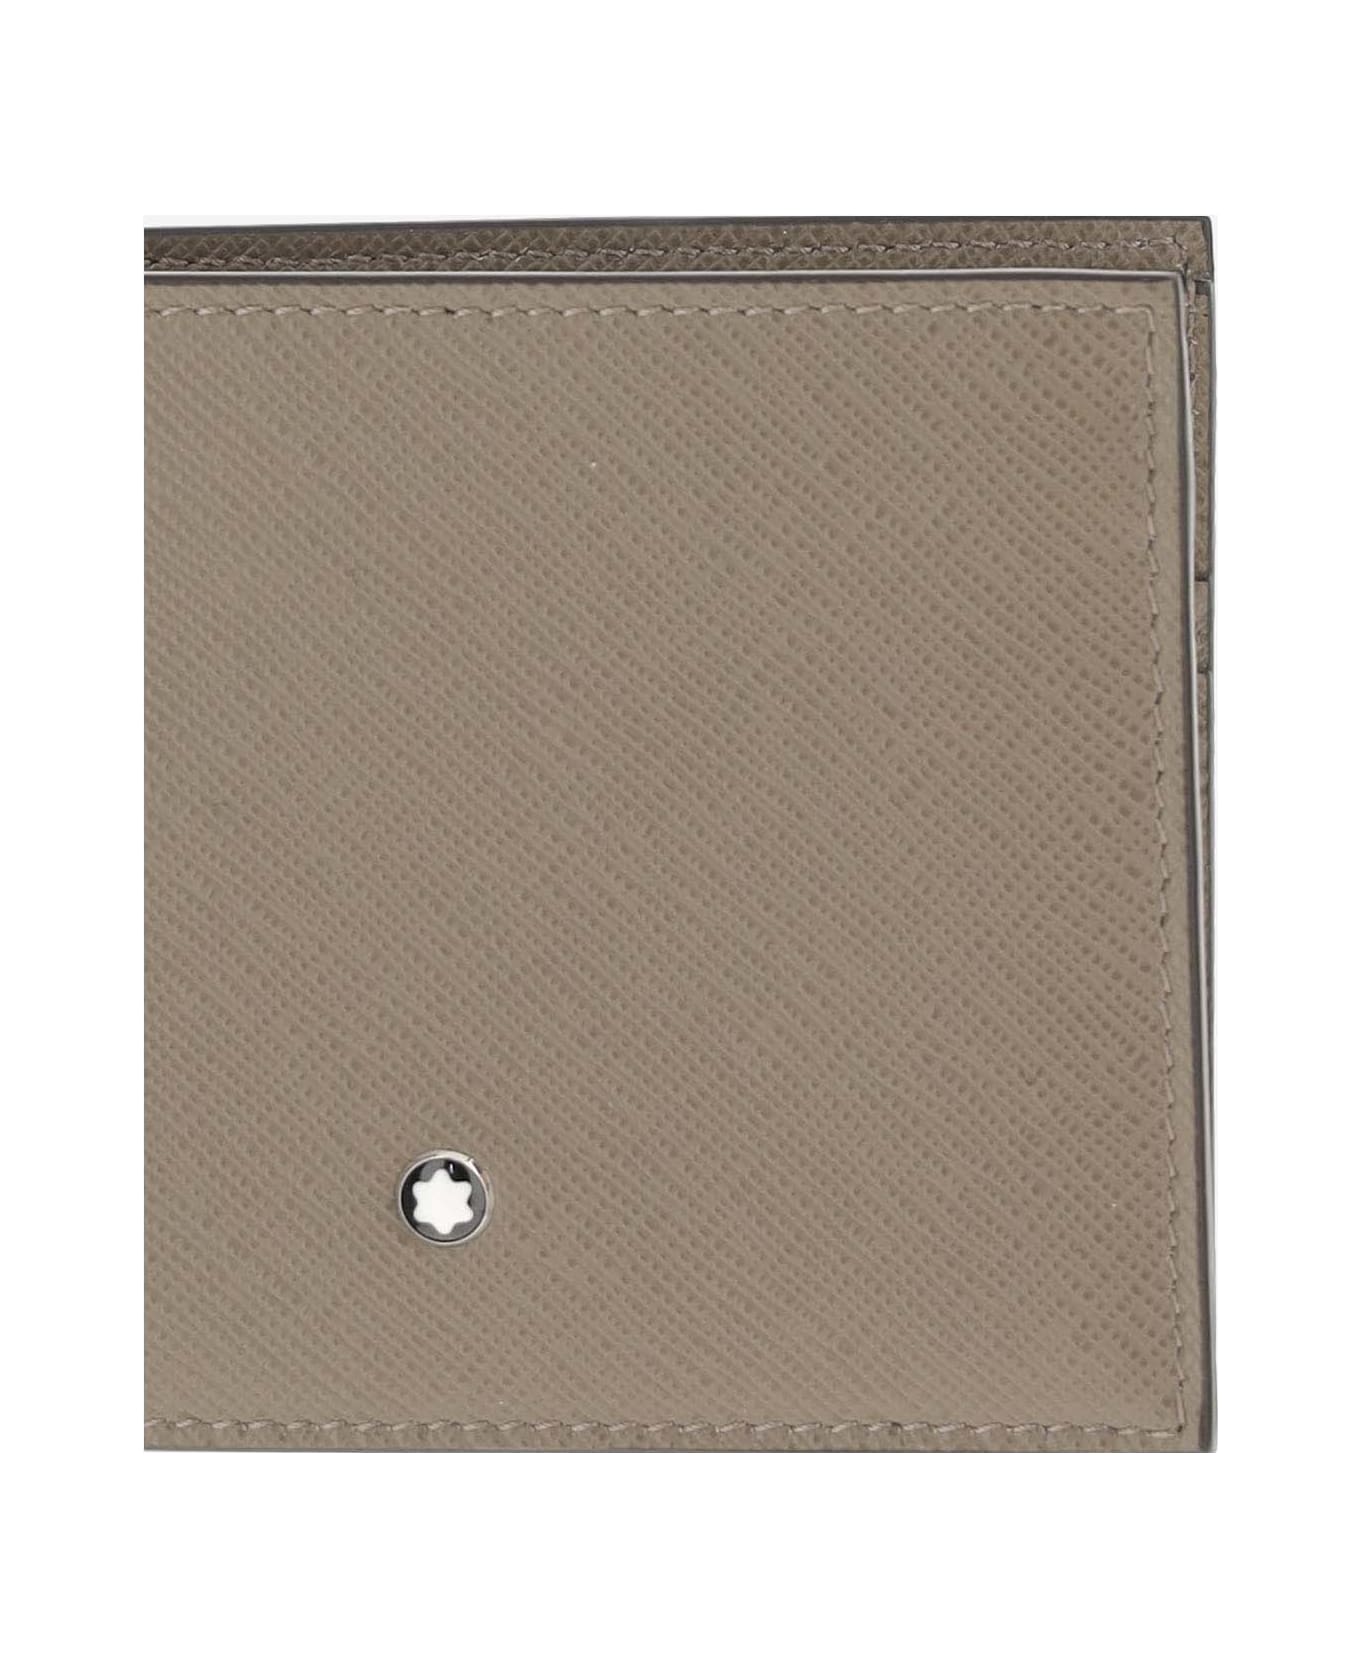 Montblanc Wallet 6 Compartments Sartorial - MASTIC 財布